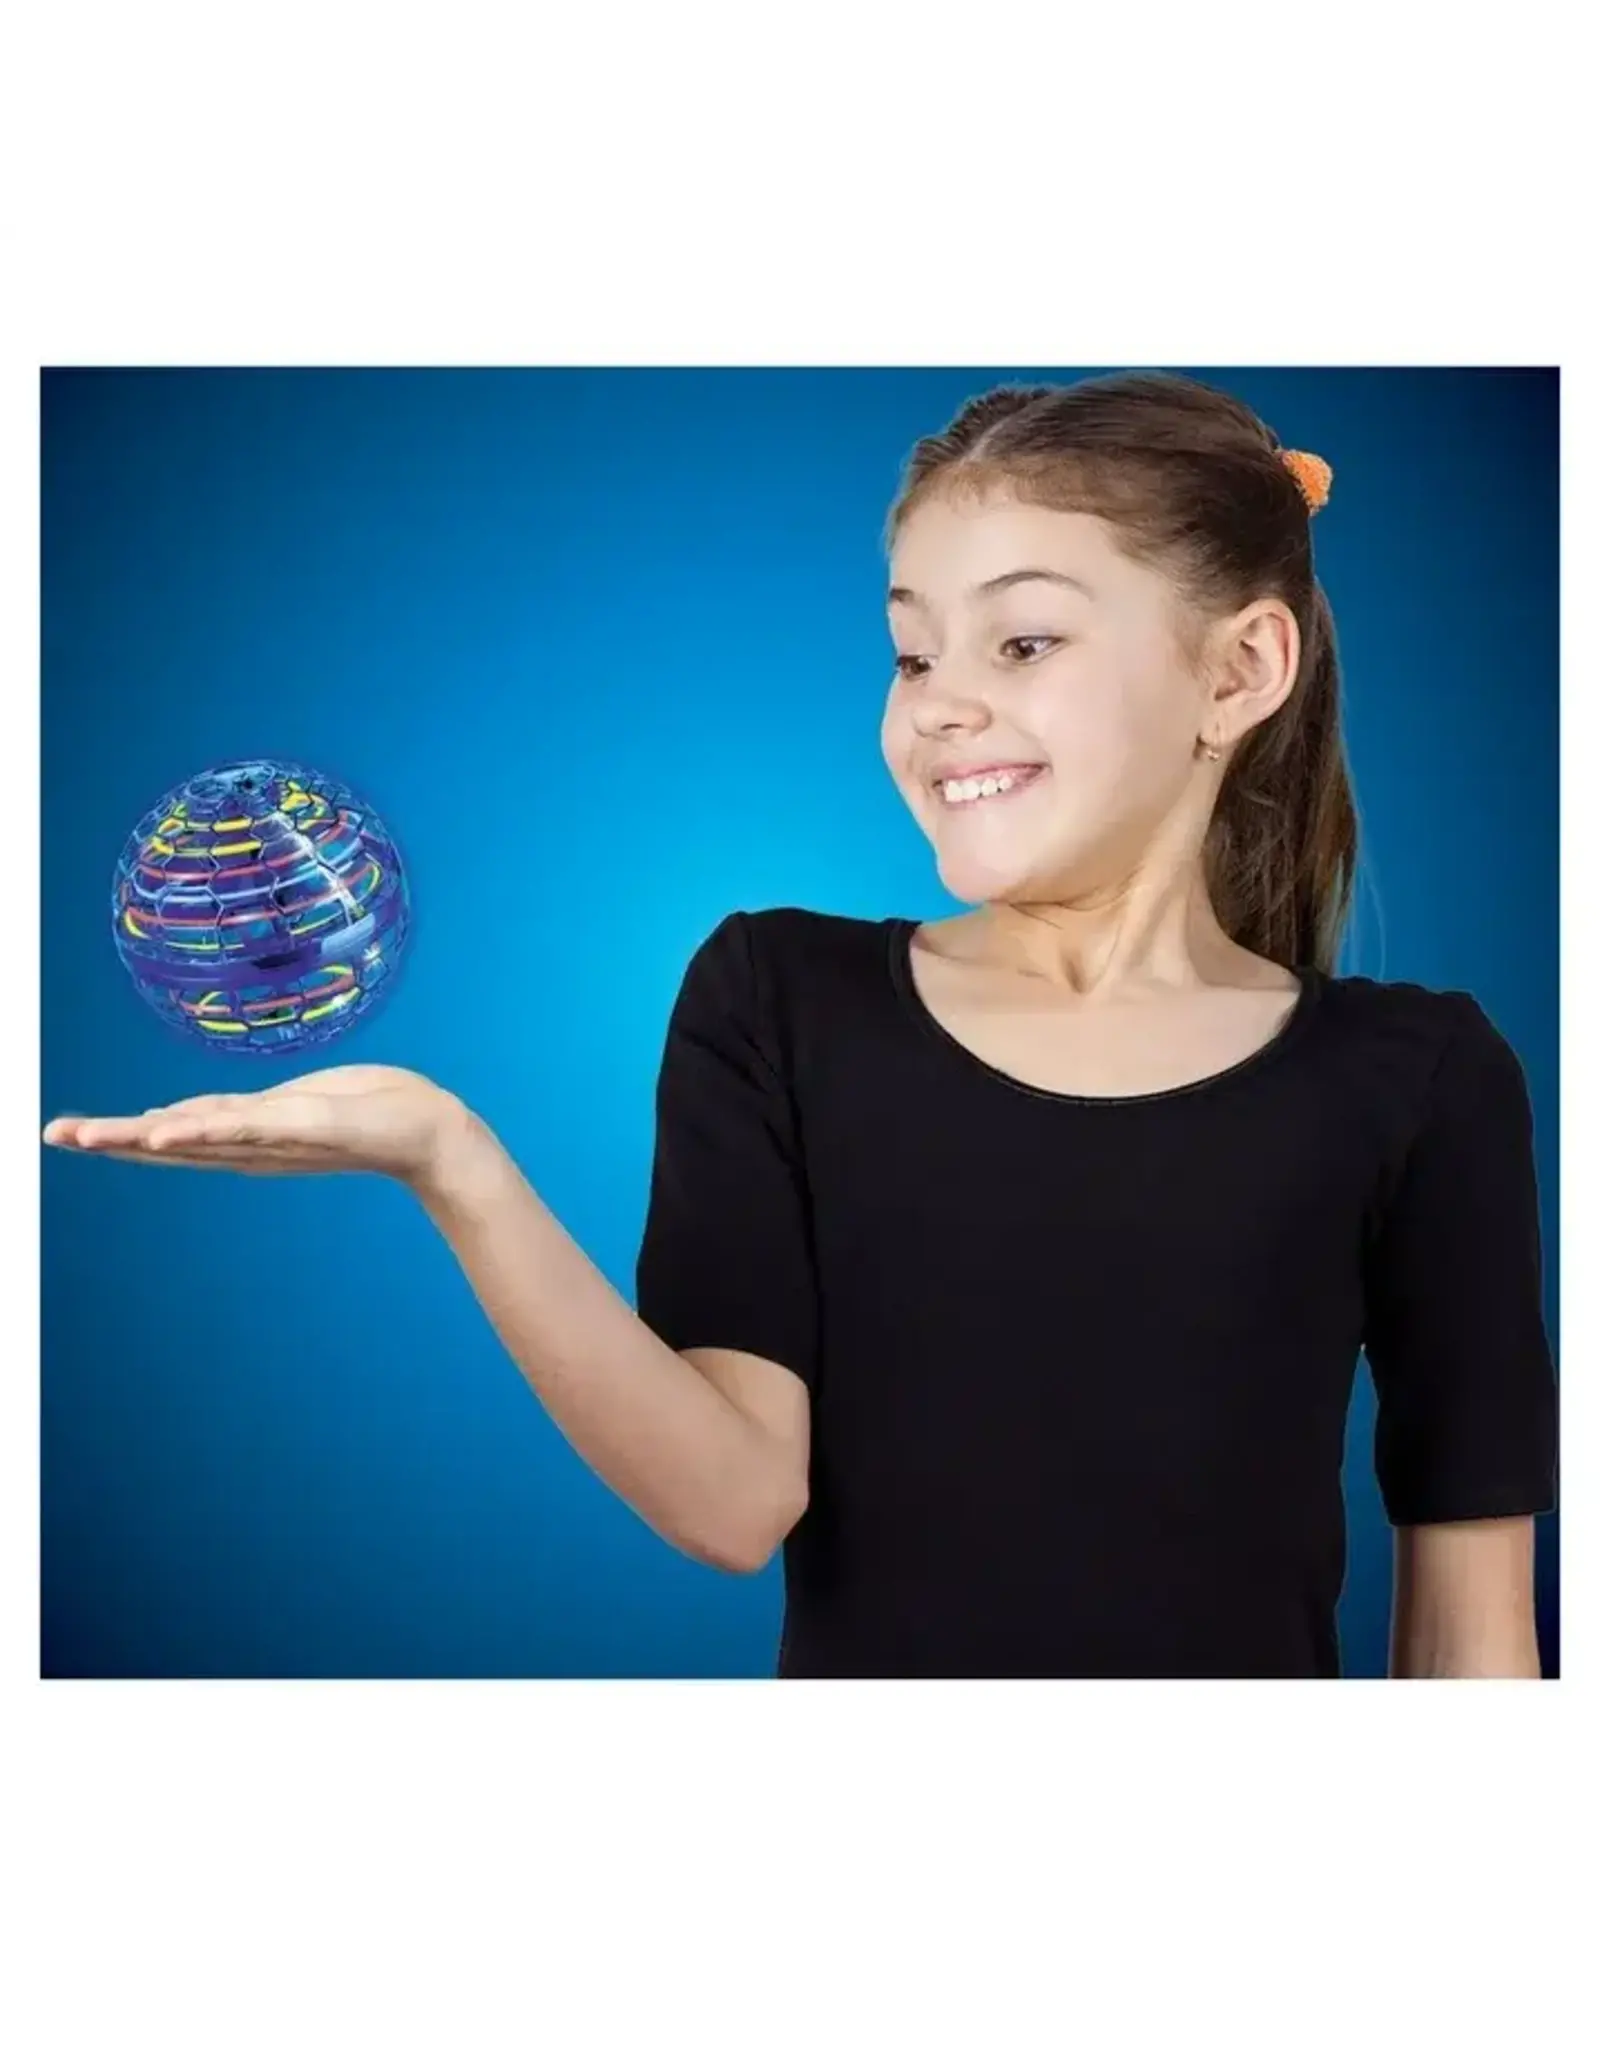 Wonder Sphere Magic Hover Ball- Blue Color- Skill Level Easy- STEM Certified